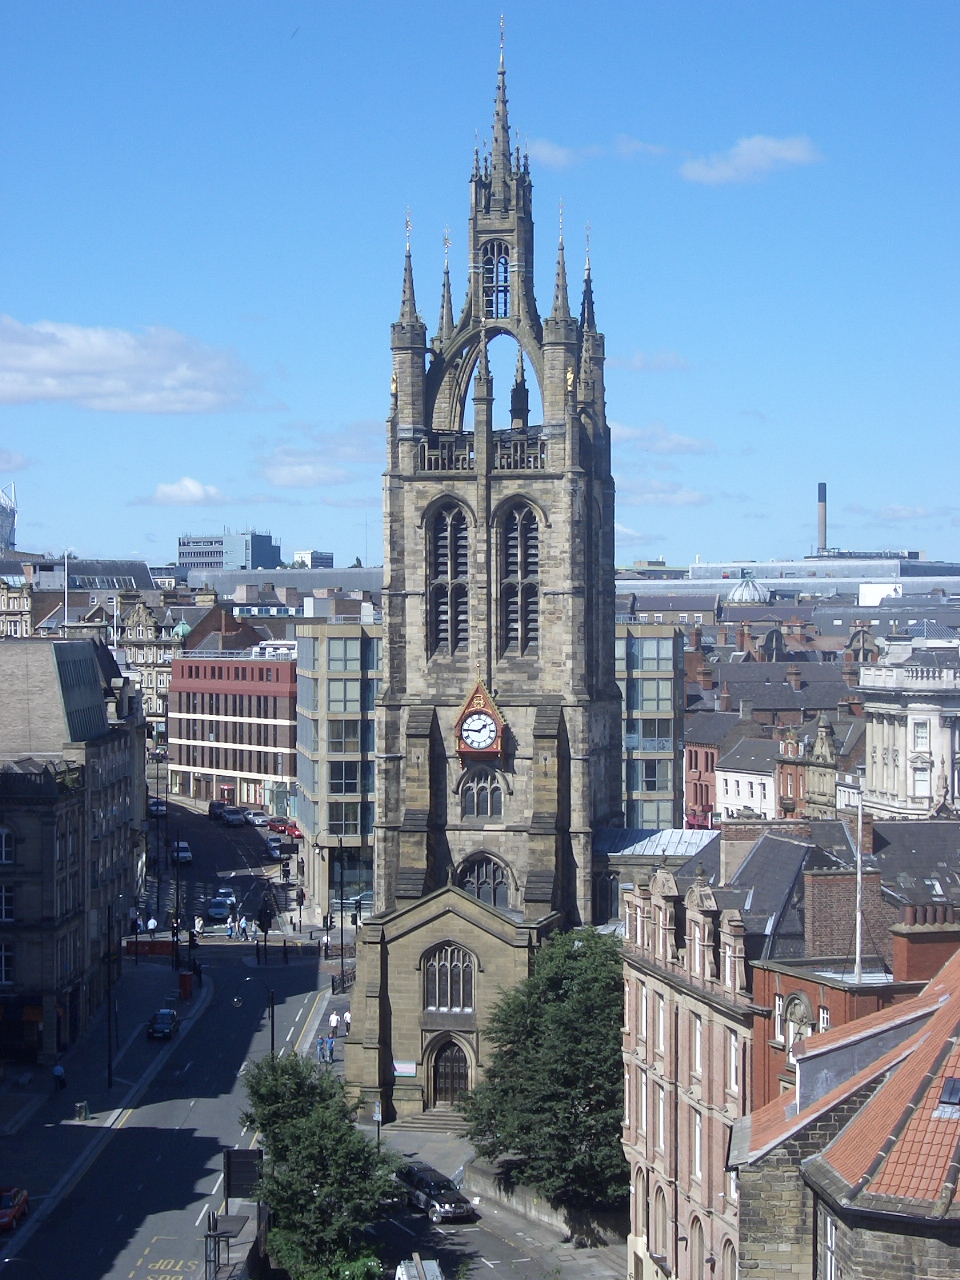 File:Newcastle upon Tyne, England.jpg - Wikimedia Commons